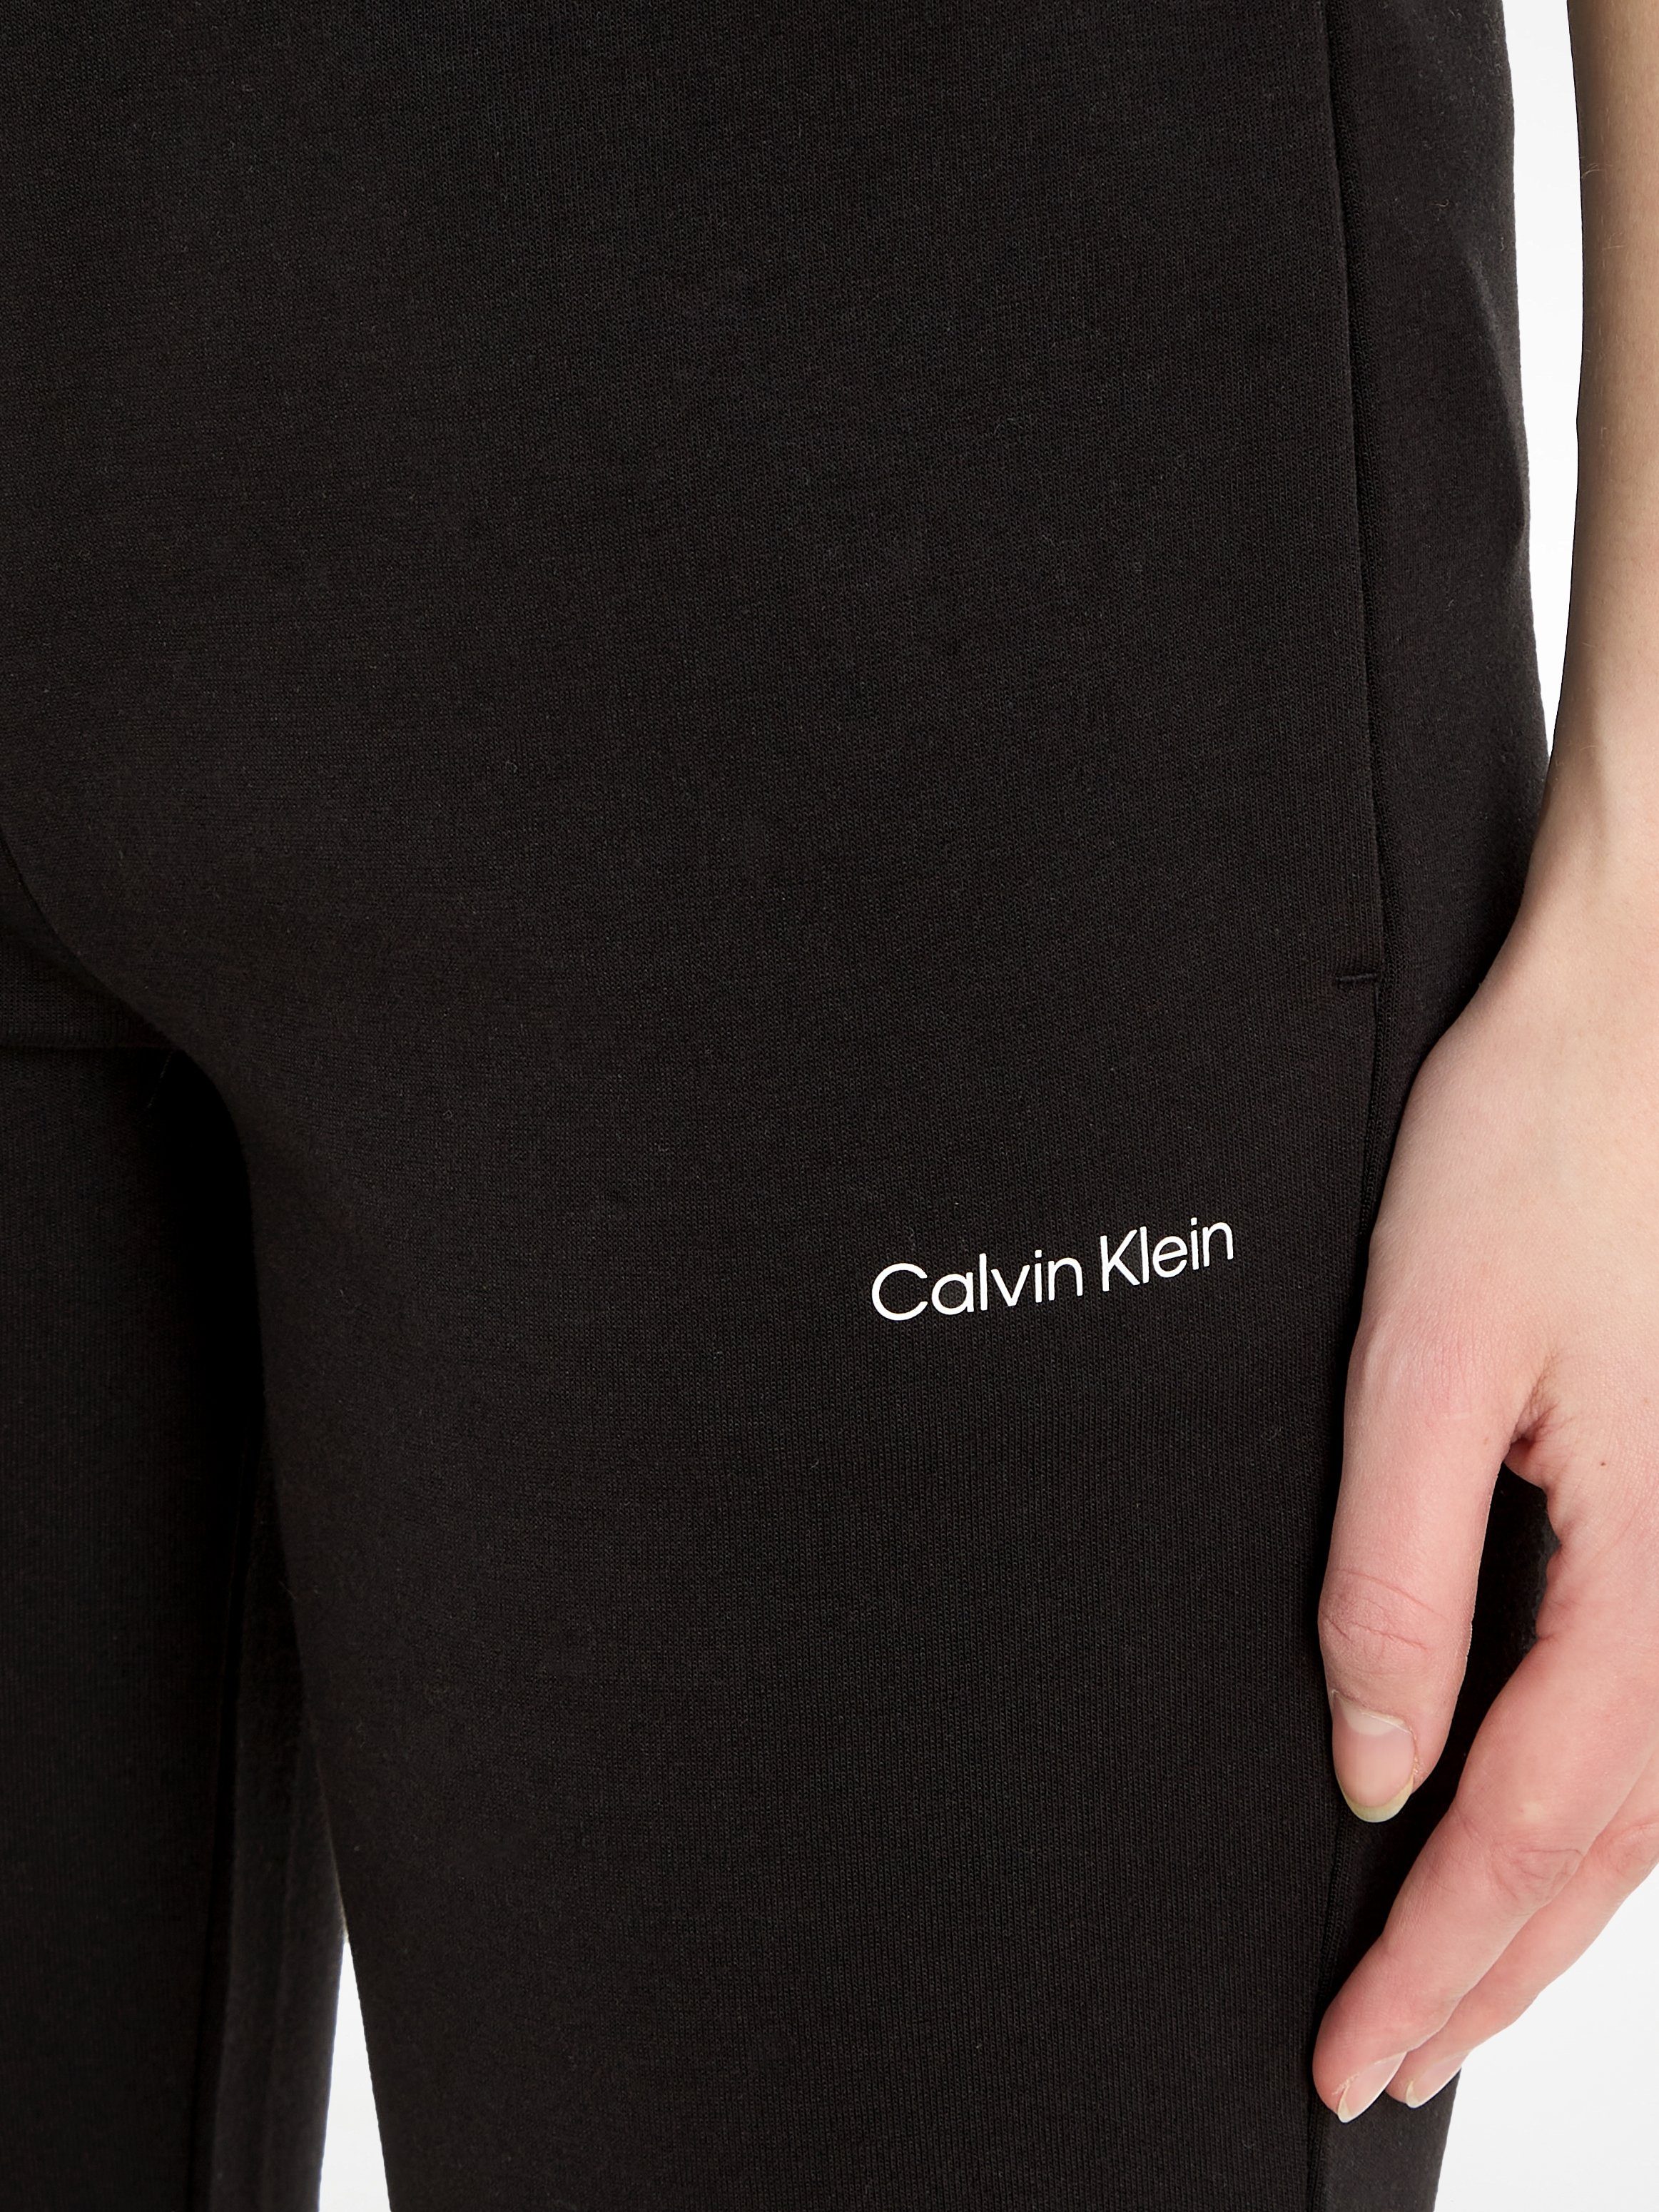 Calvin Klein Sweathose Ck Calvin Klein kontrastfarbenem Black mit Logo